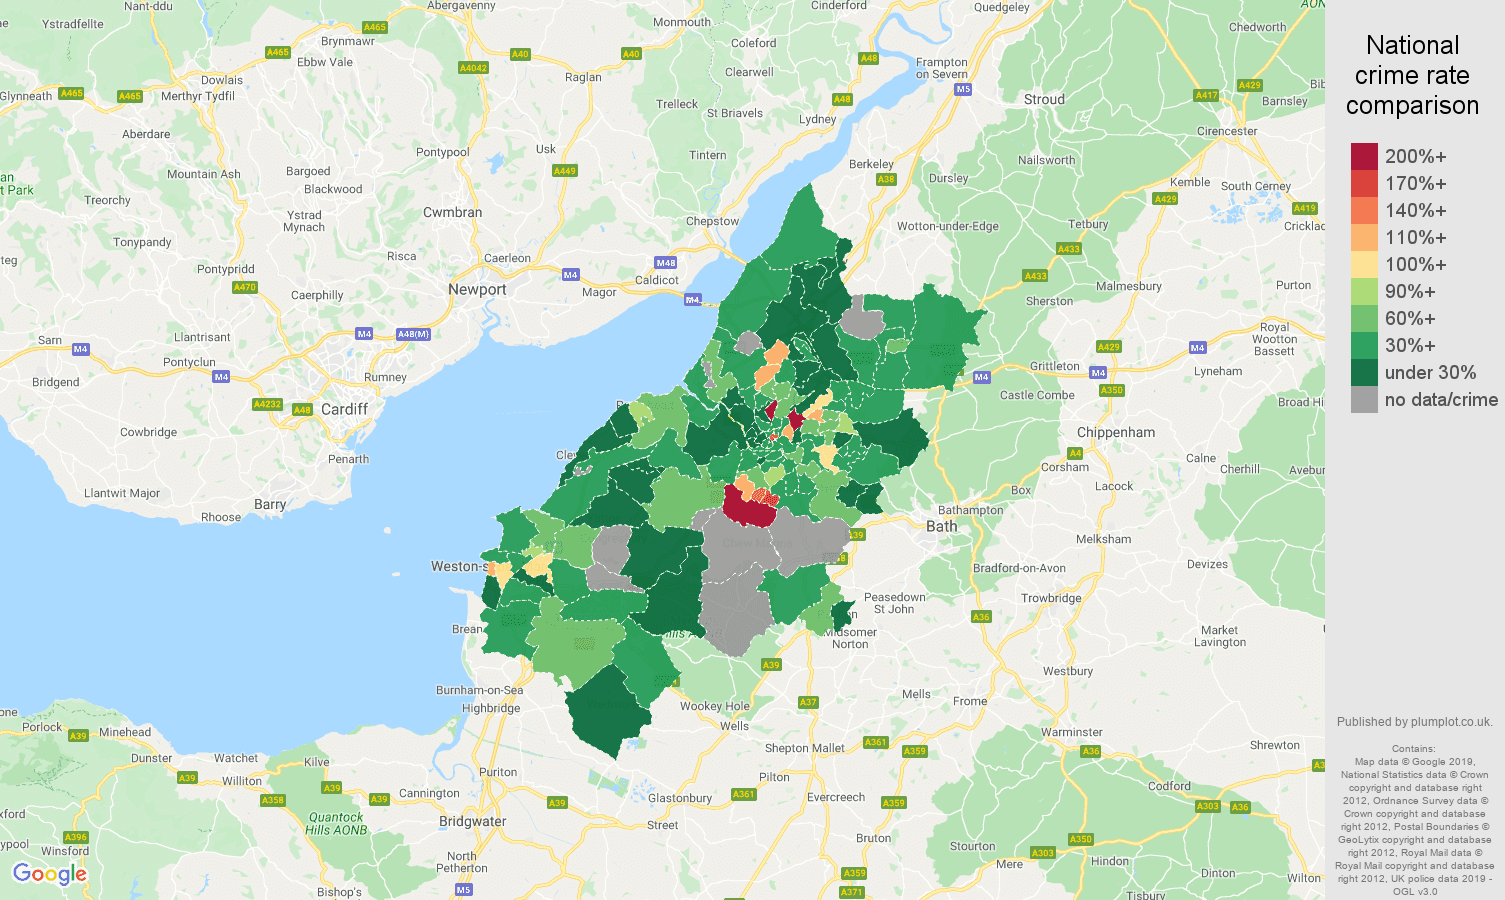 Bristol other crime rate comparison map